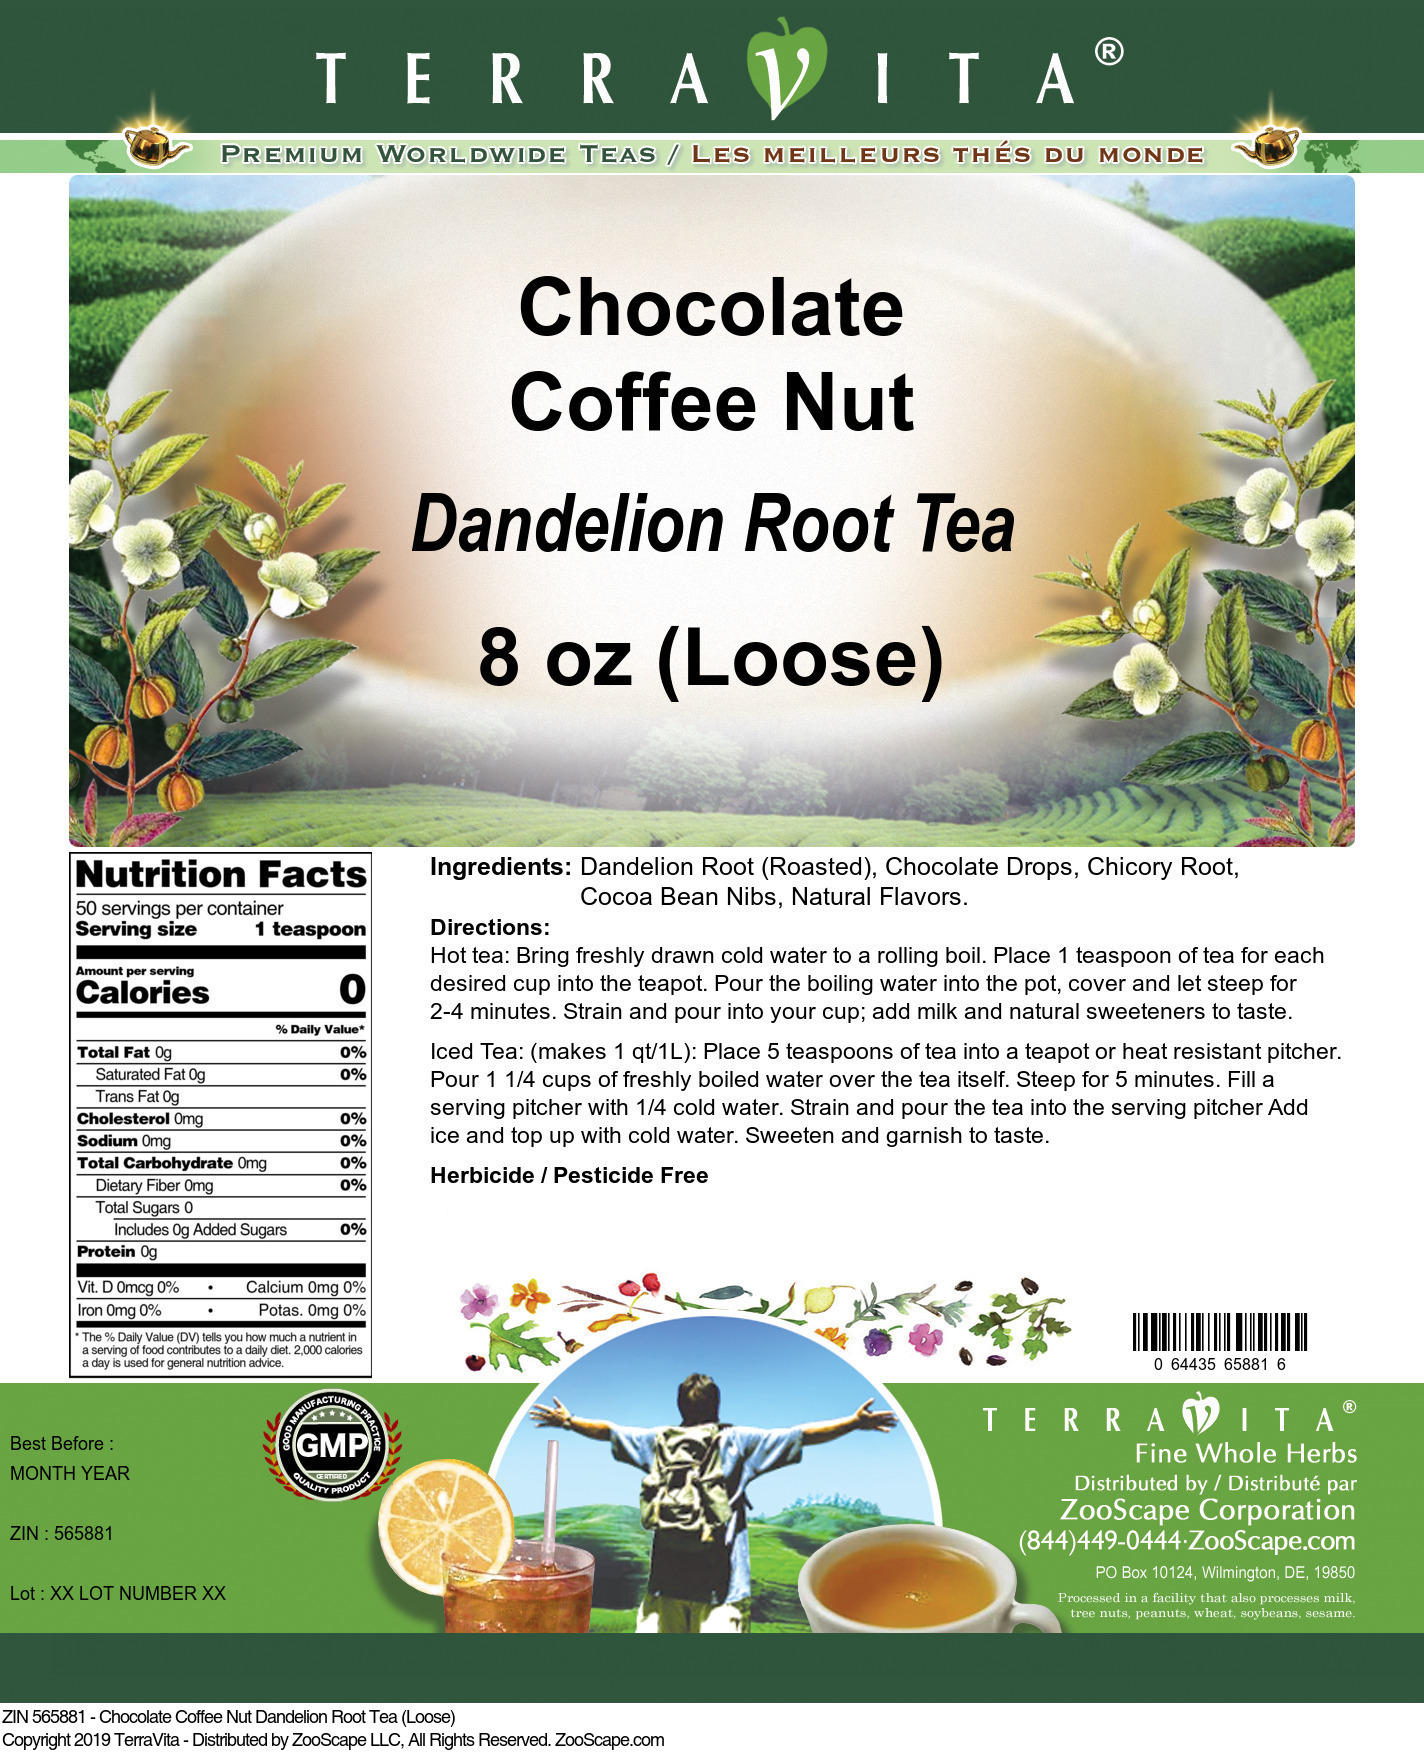 Chocolate Coffee Nut Dandelion Root Tea (Loose) - Label